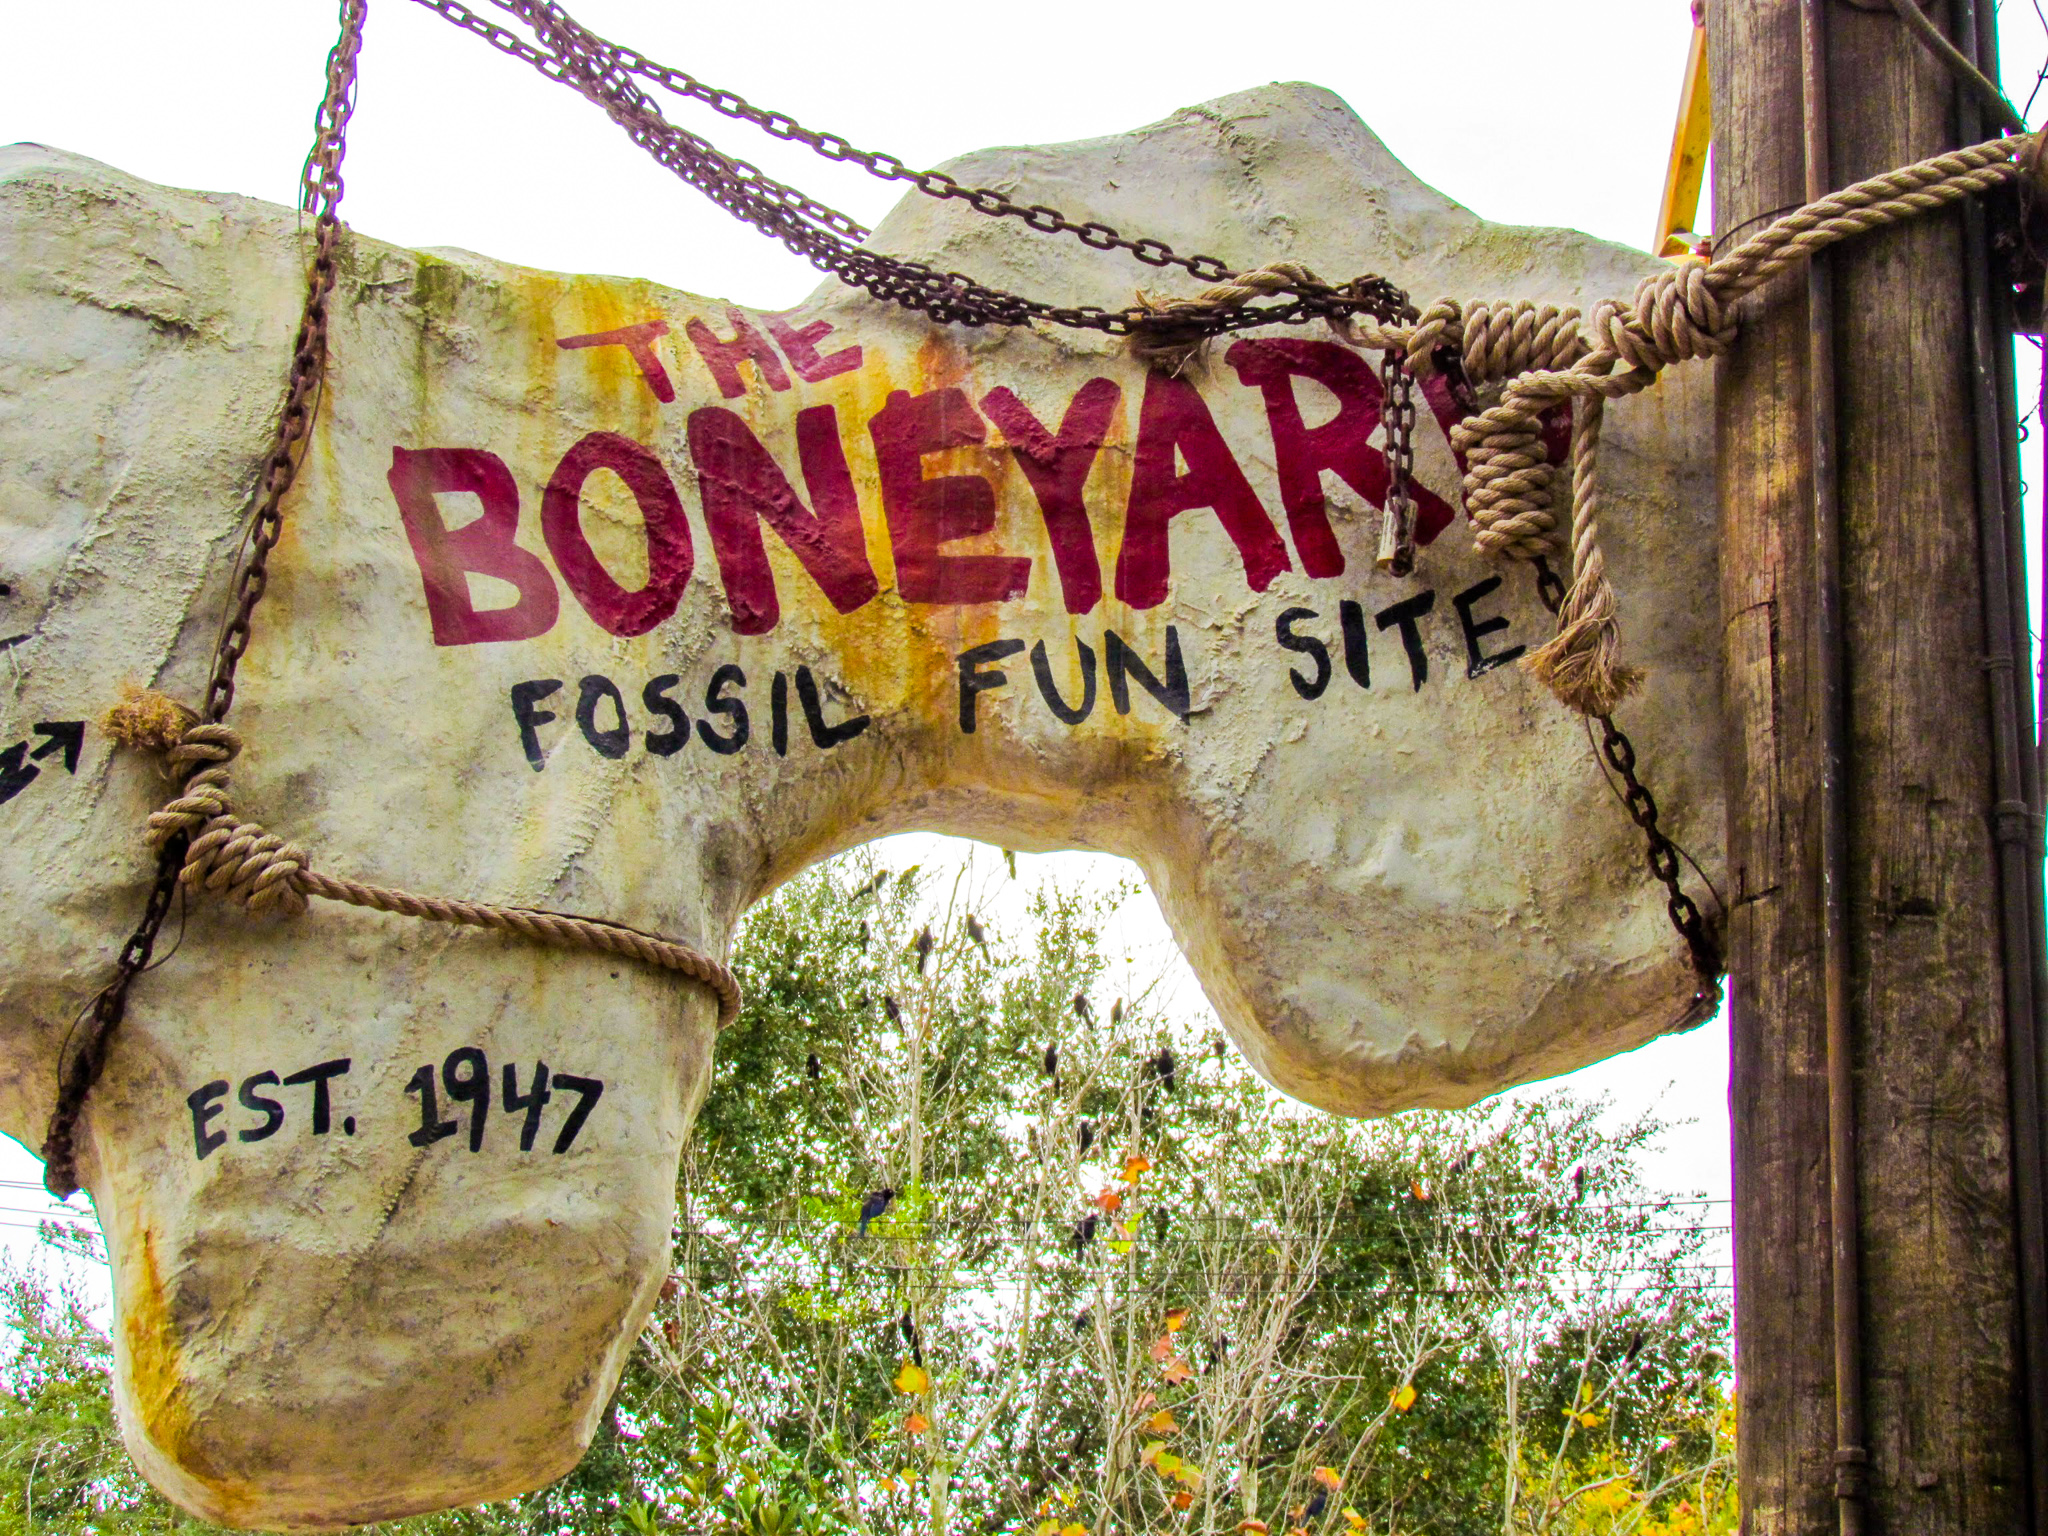 Sensory friendly activities in The Boneyard in Dinoland U.S.A at Disney's Animal Kingdom